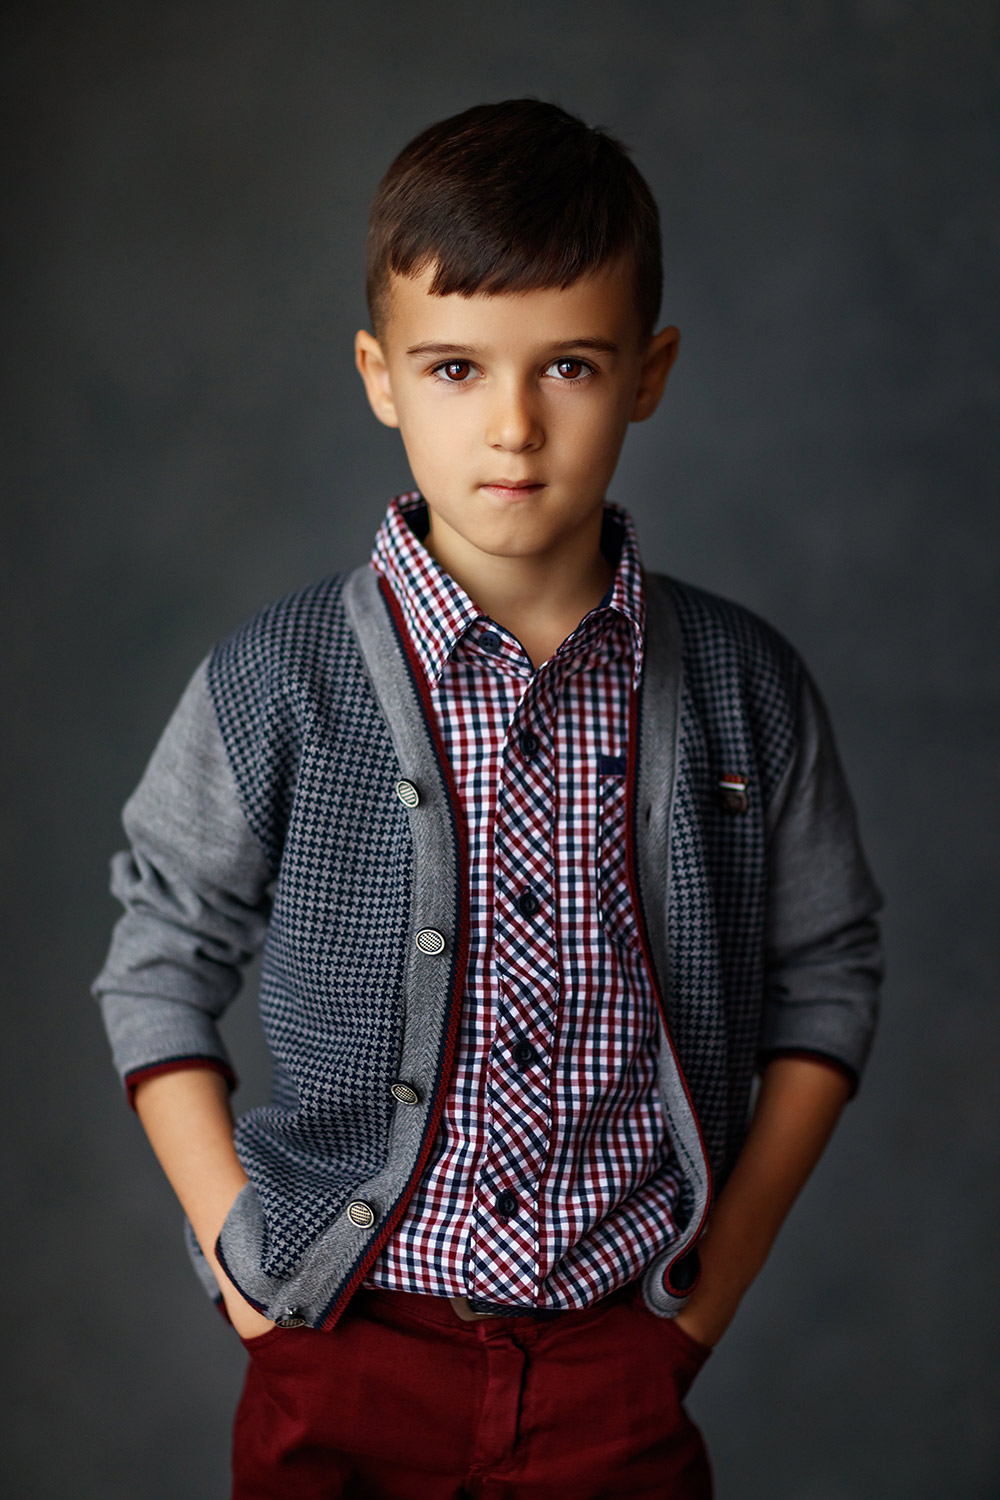 Little Child Boy Model Image & Photo (Free Trial) | Bigstock